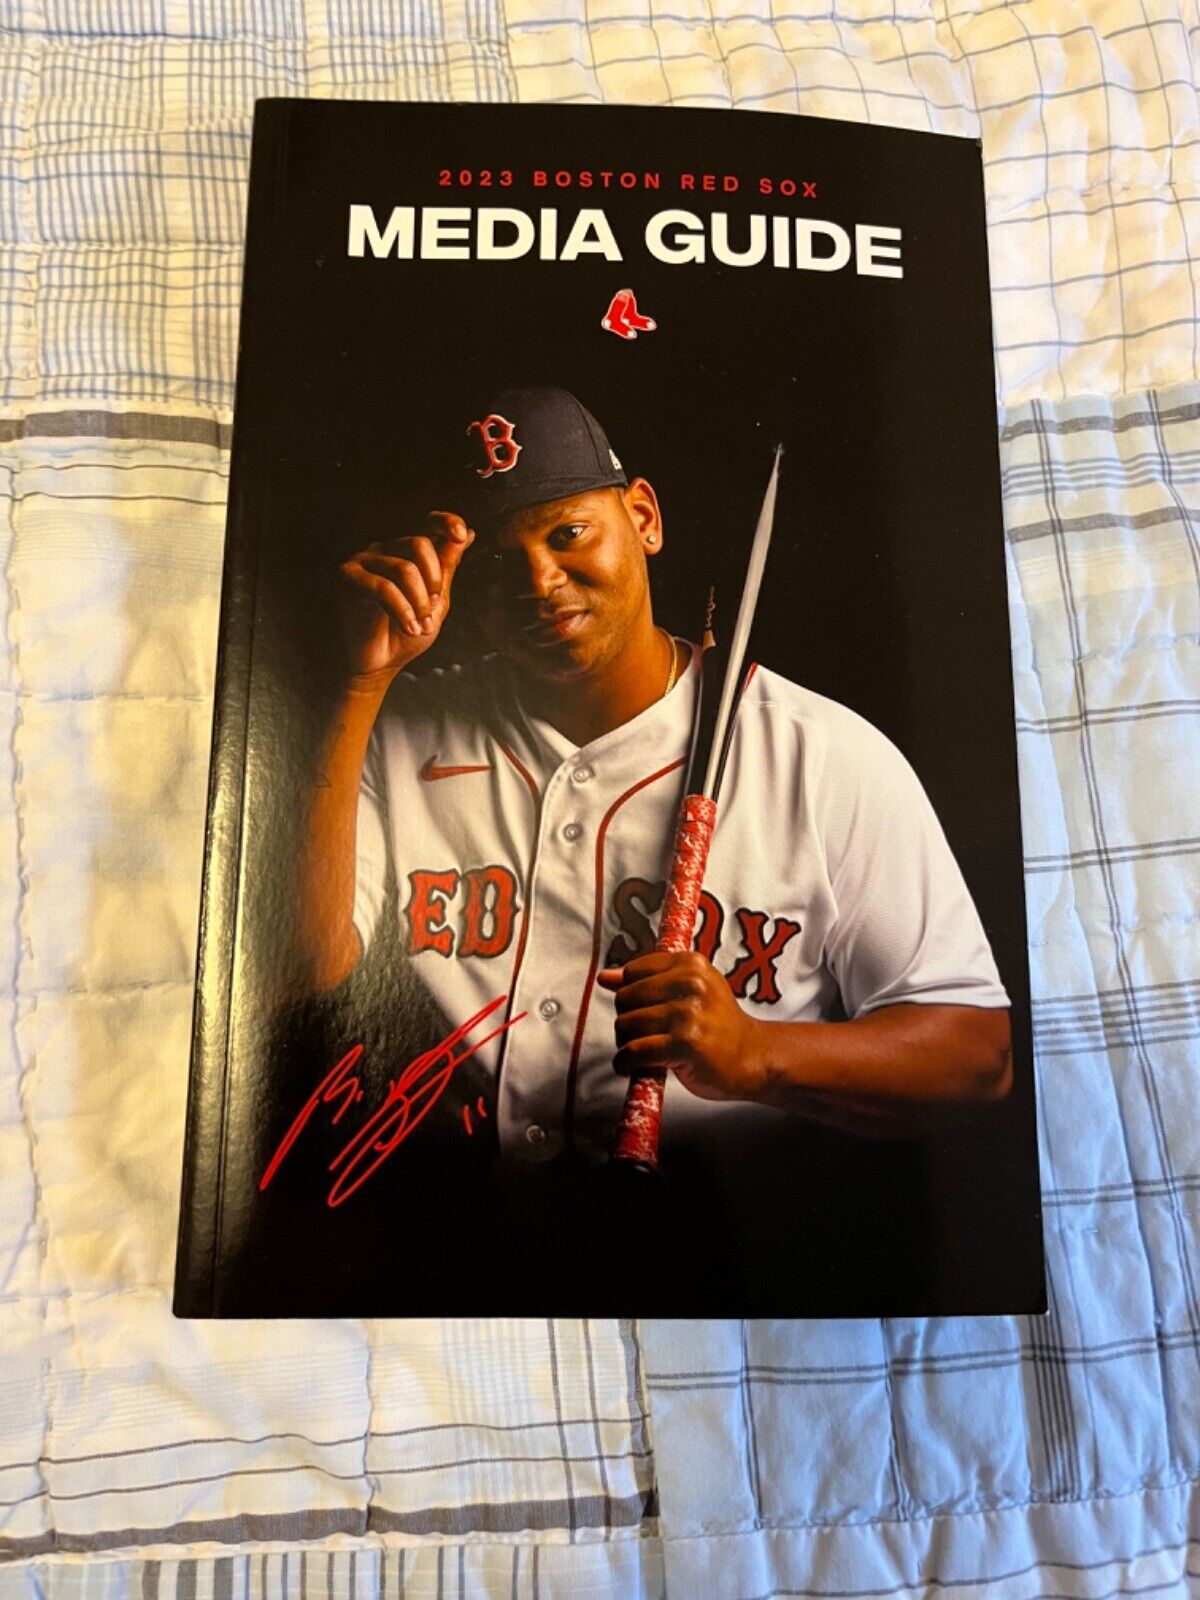 Rafael Devers 2023 Boston Red Sox Media Guide eBay